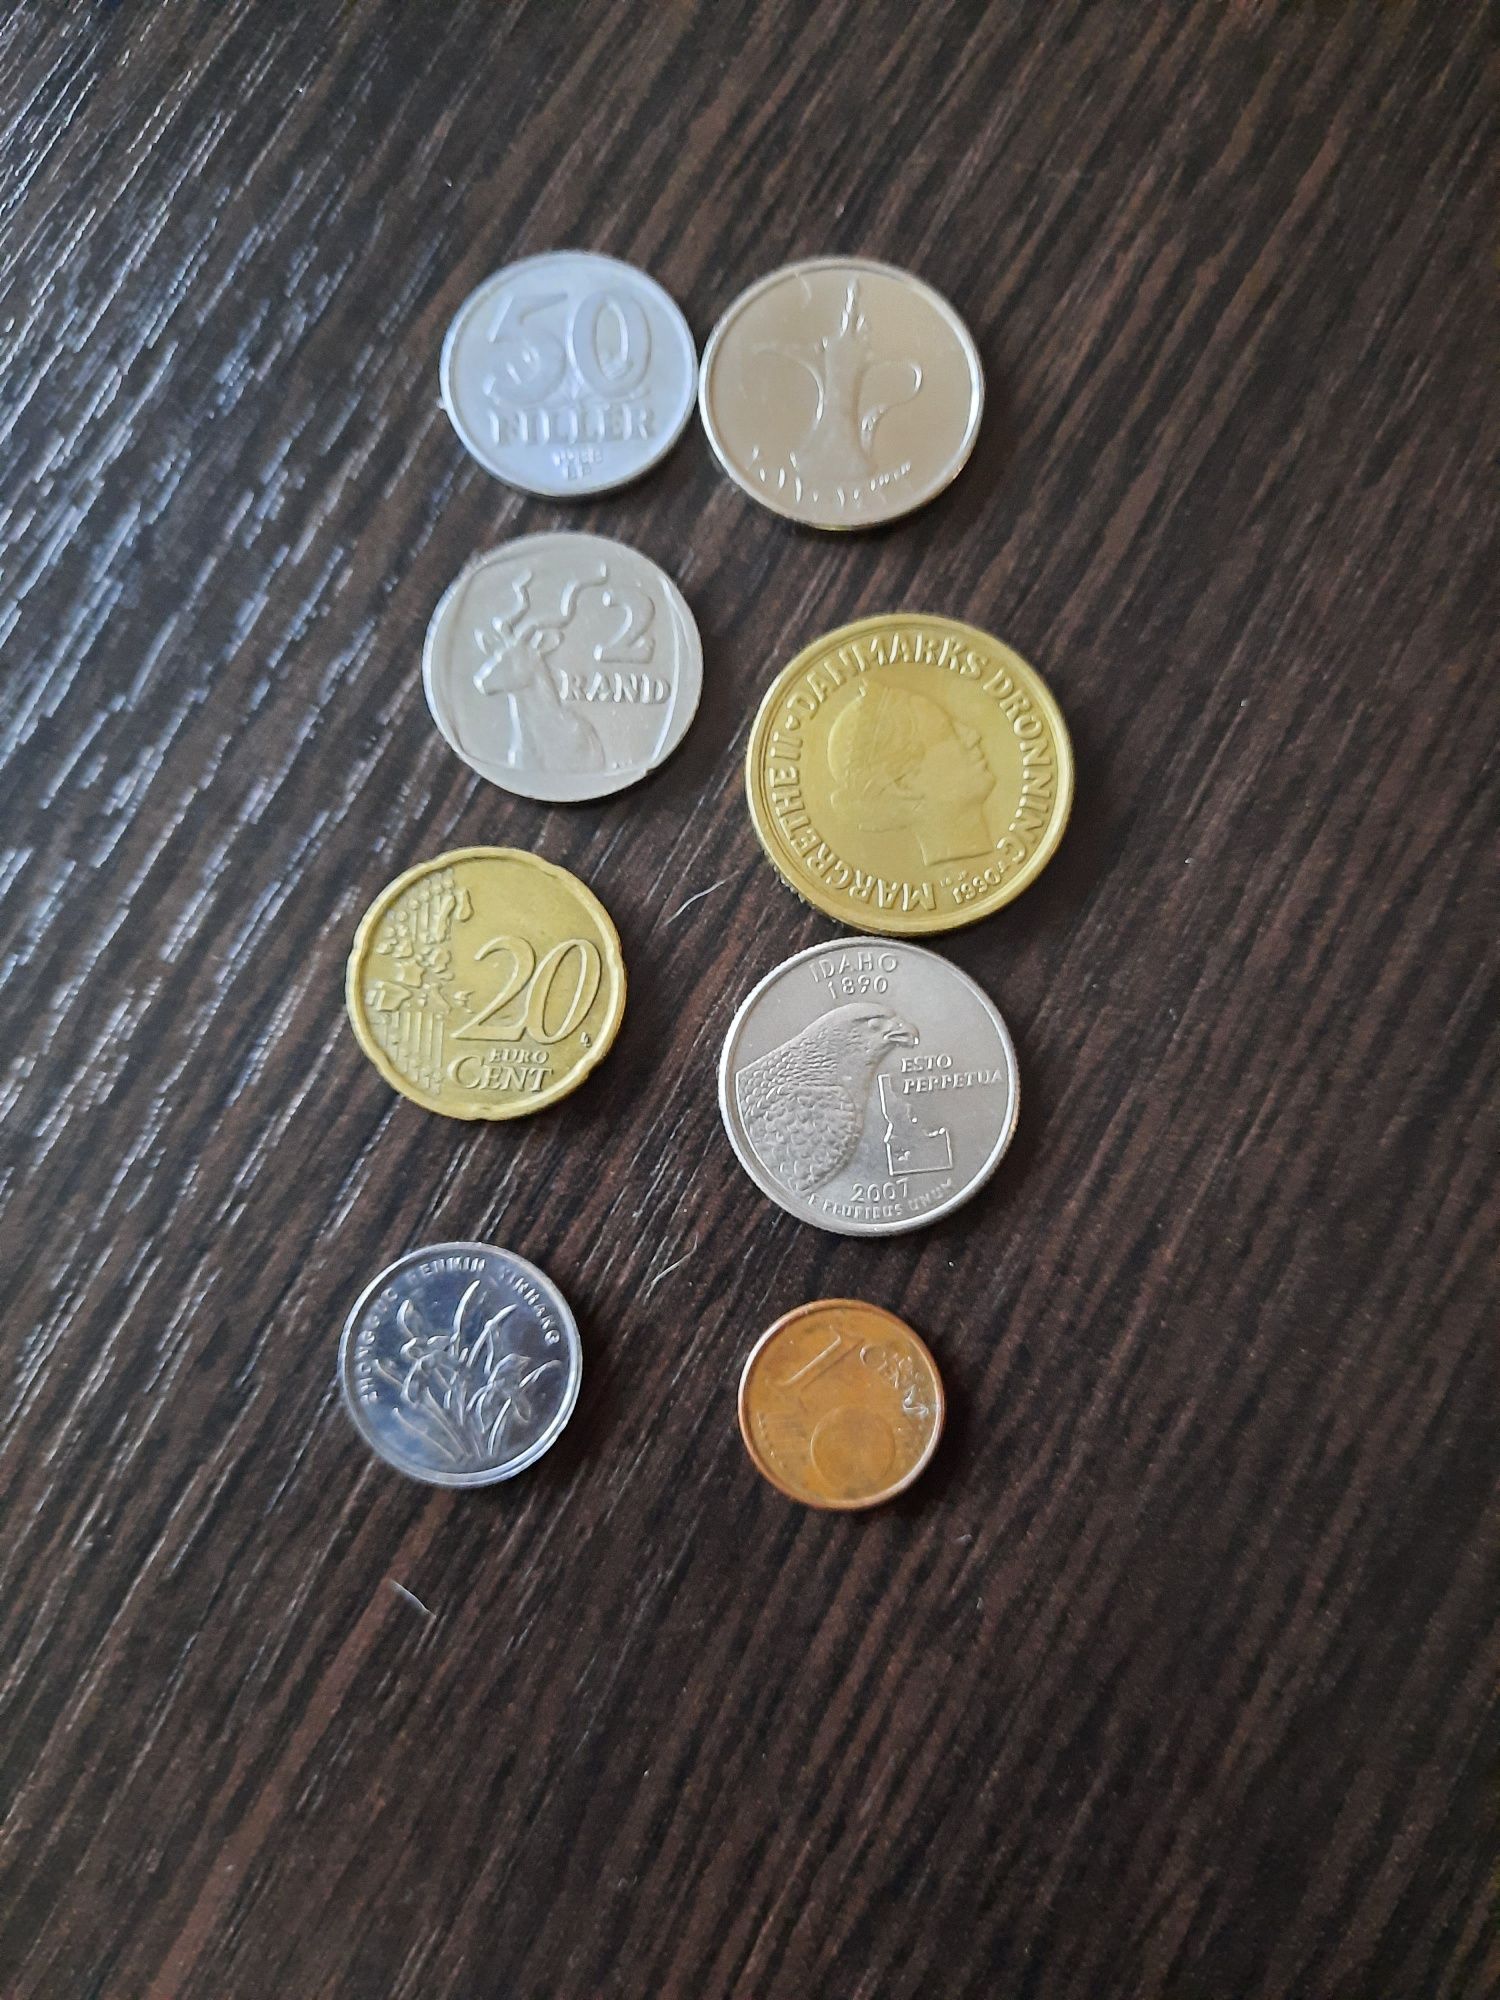 One penny монеты